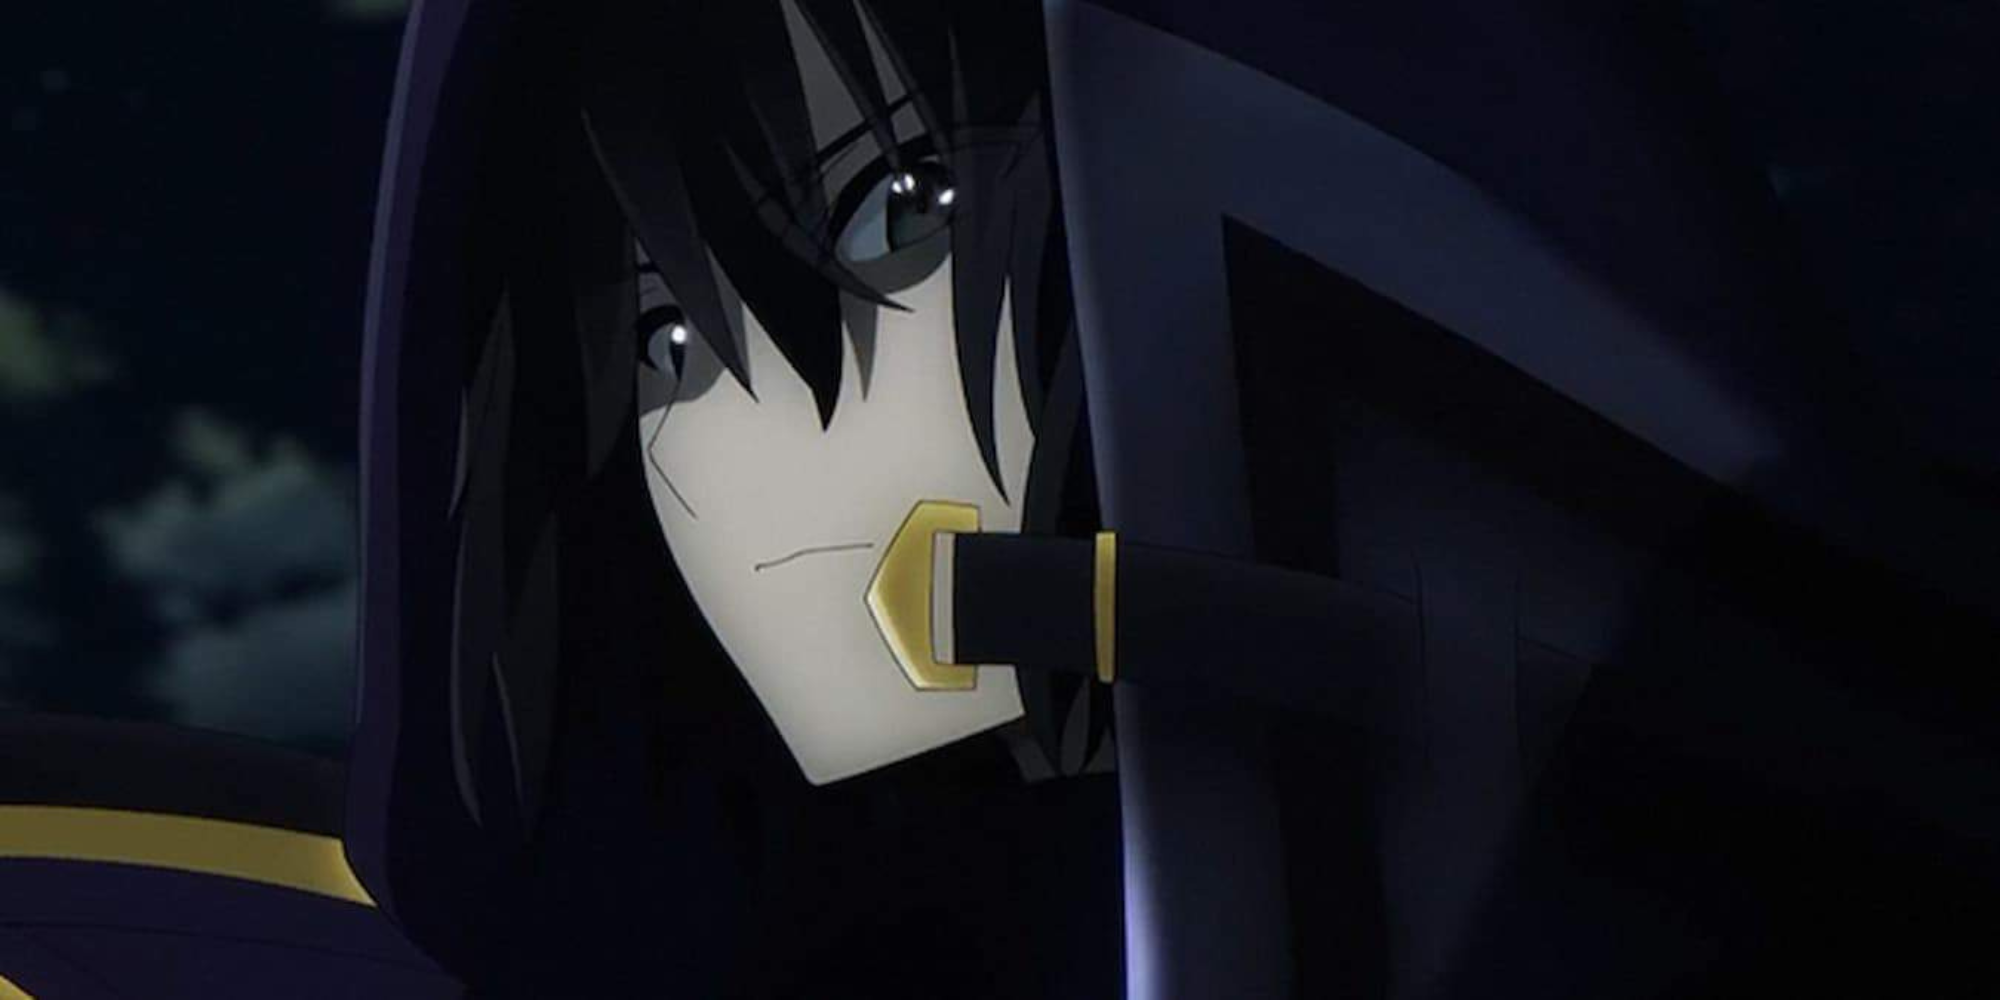 Anime Trending - The Eminence in Shadow Season 2 - Episode 2